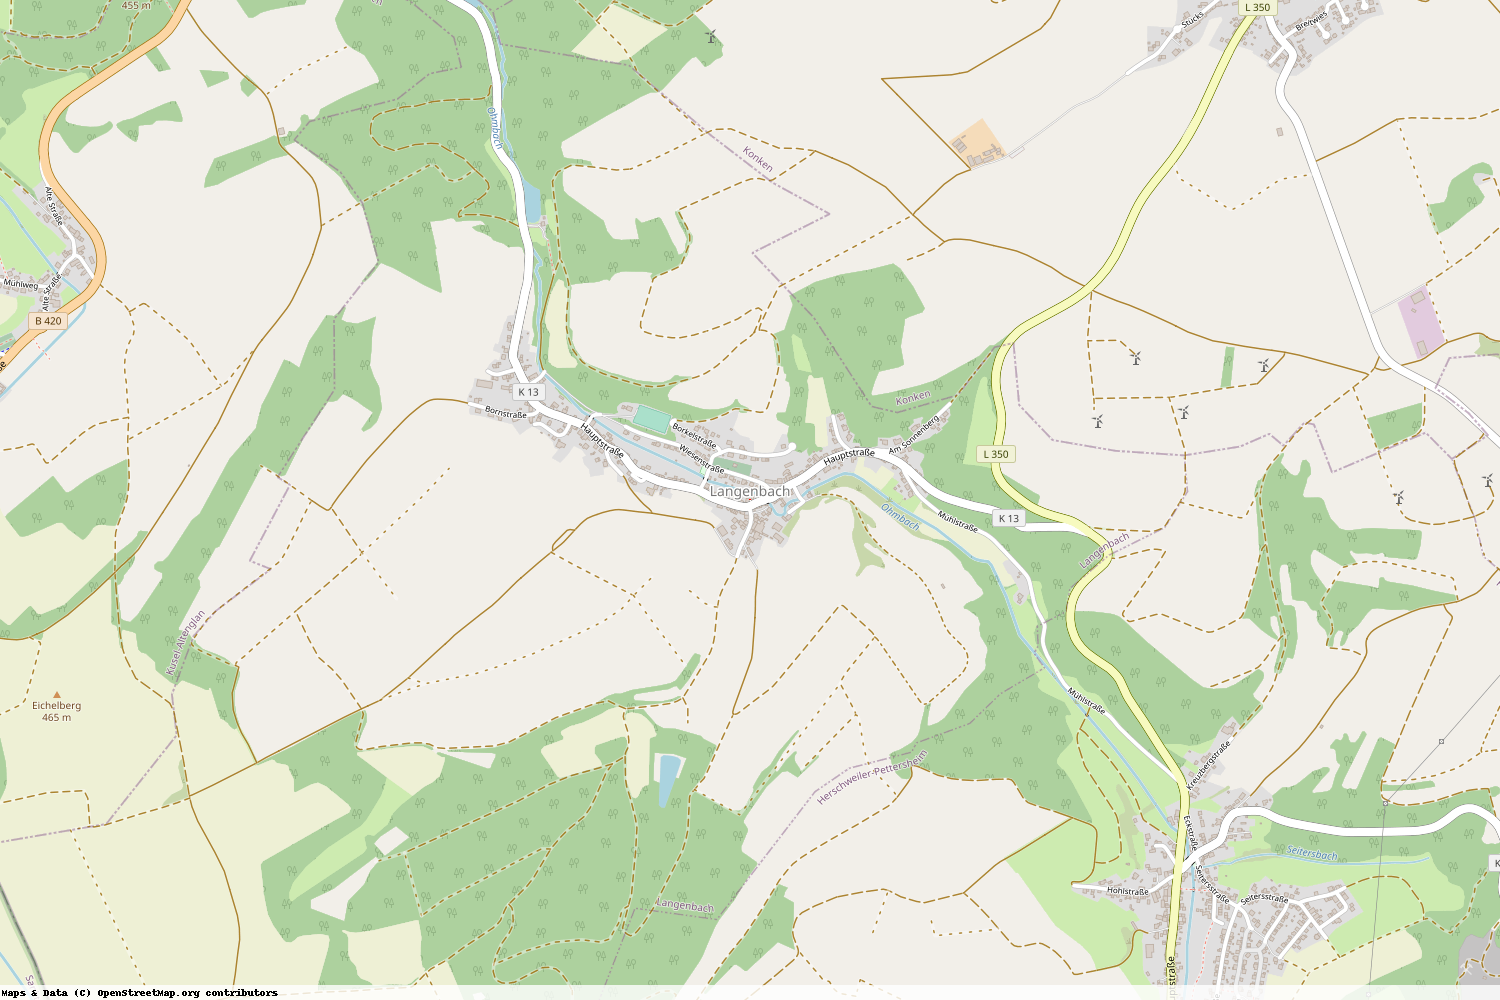 Ist gerade Stromausfall in Rheinland-Pfalz - Kusel - Langenbach?